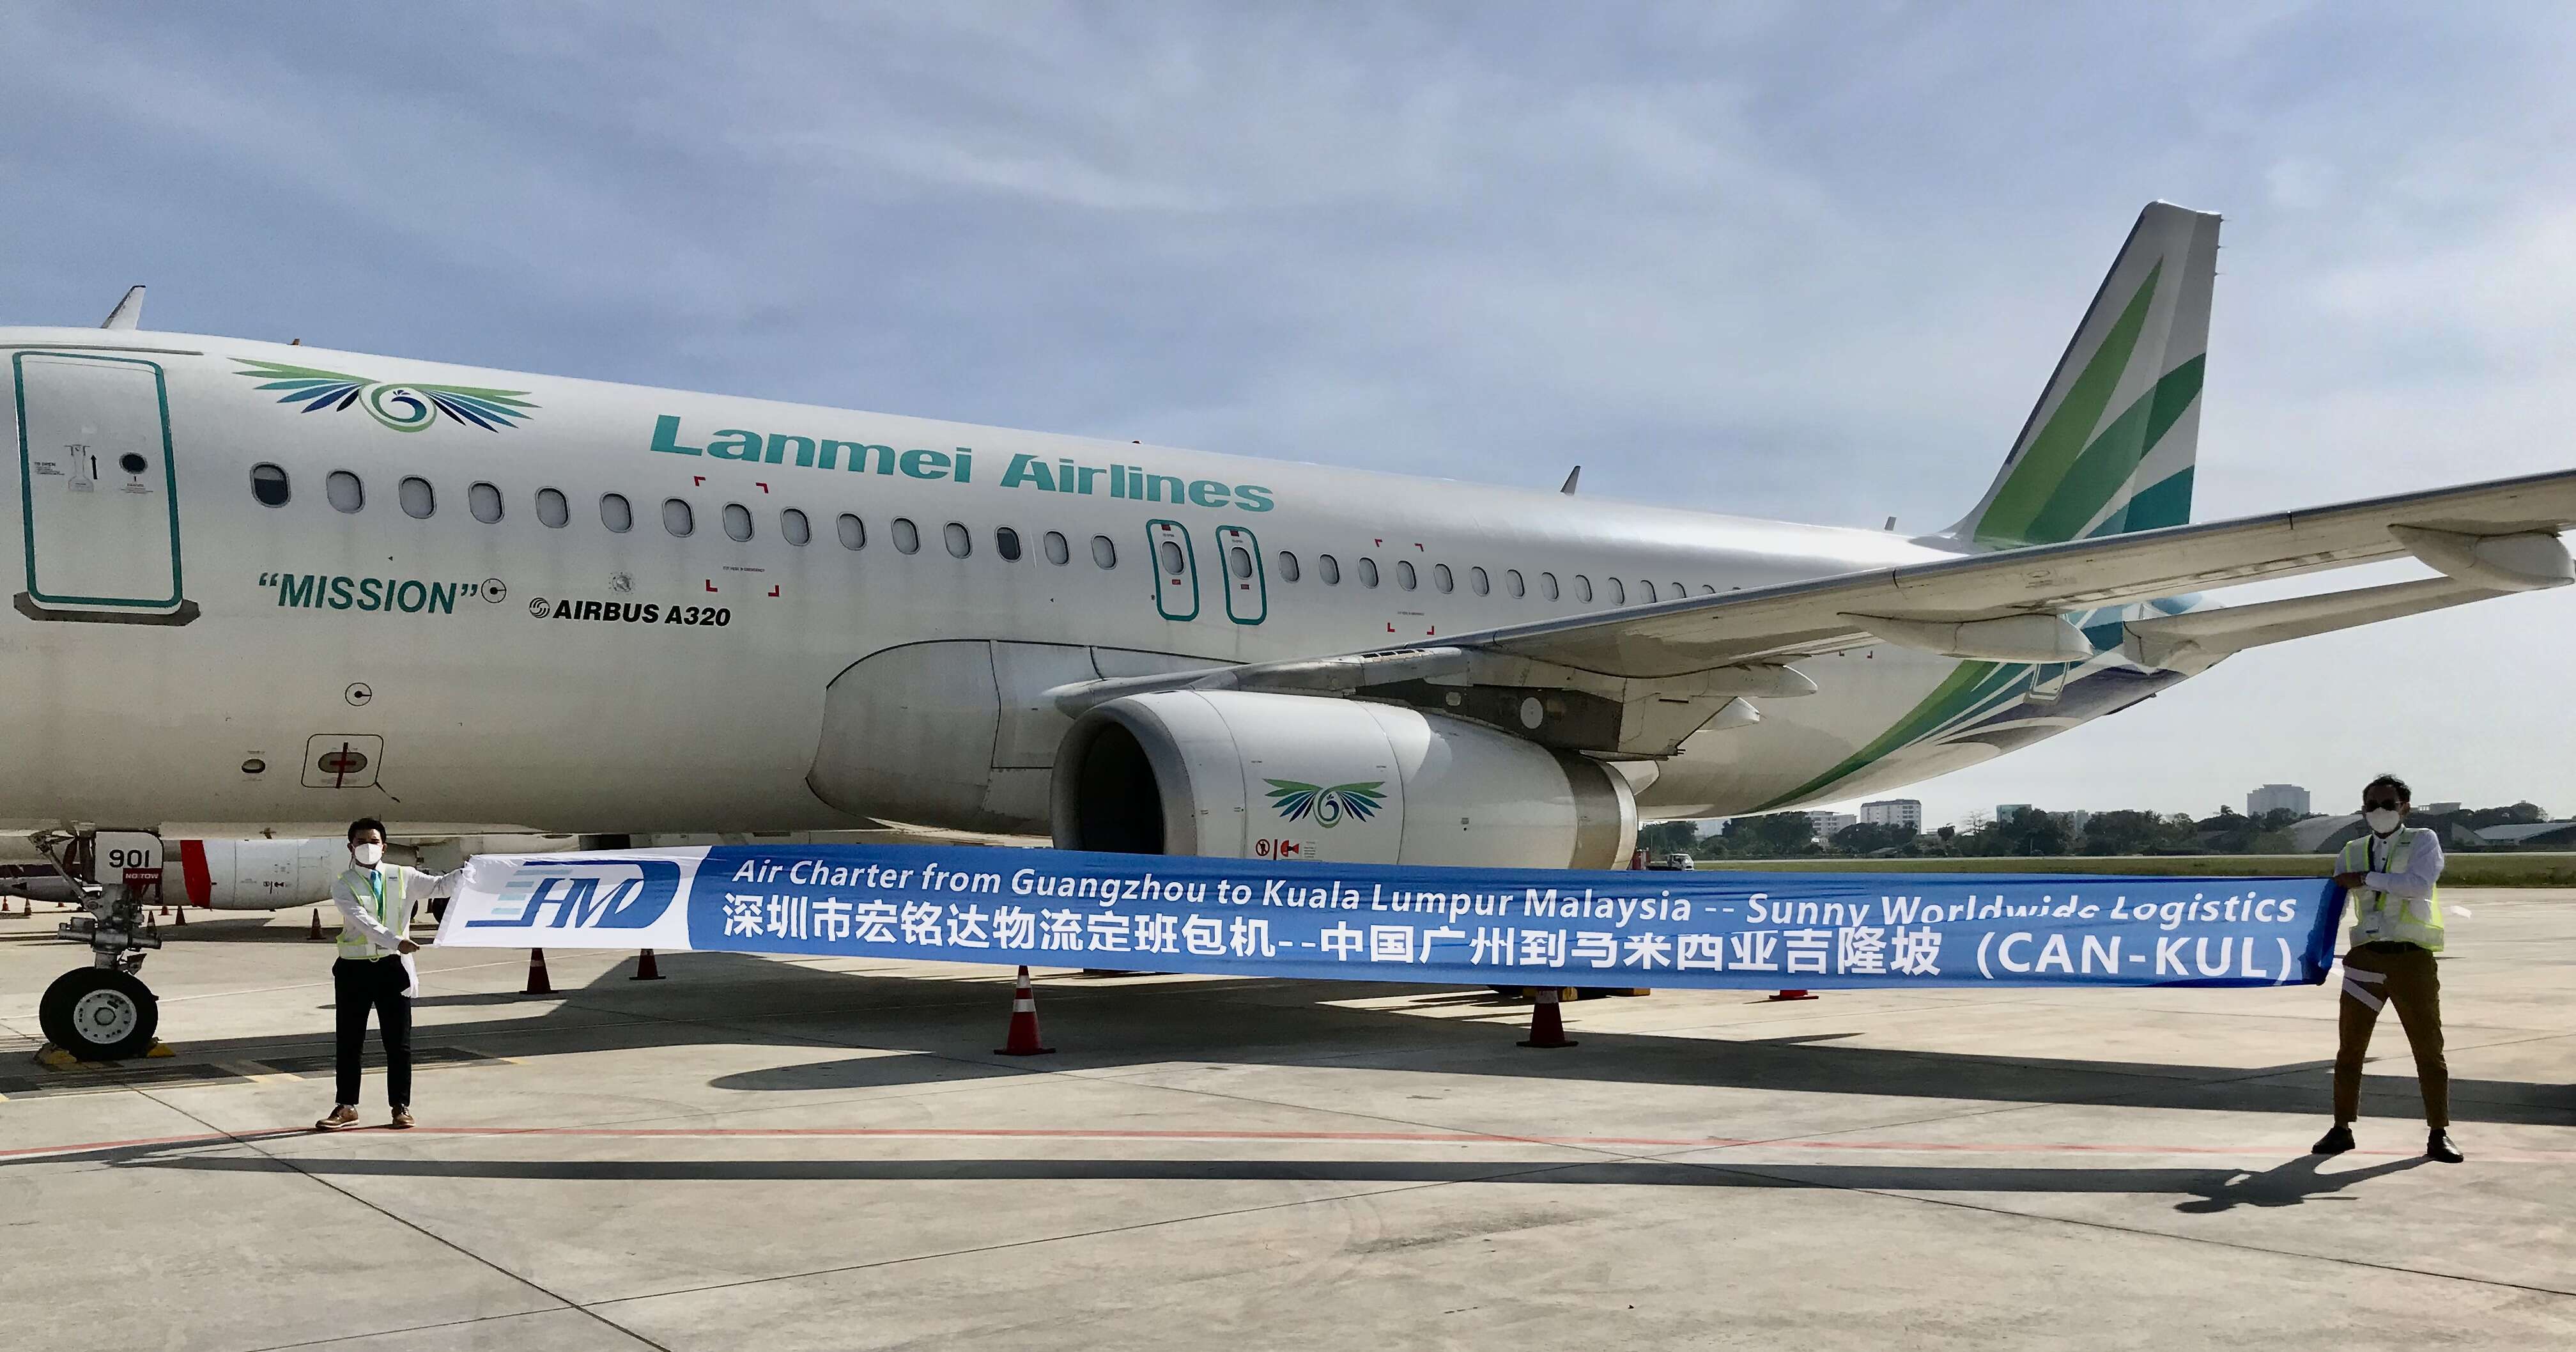 China to Philippines air shipping forwarder freight agent mula sa Guangzhou Shenzhen